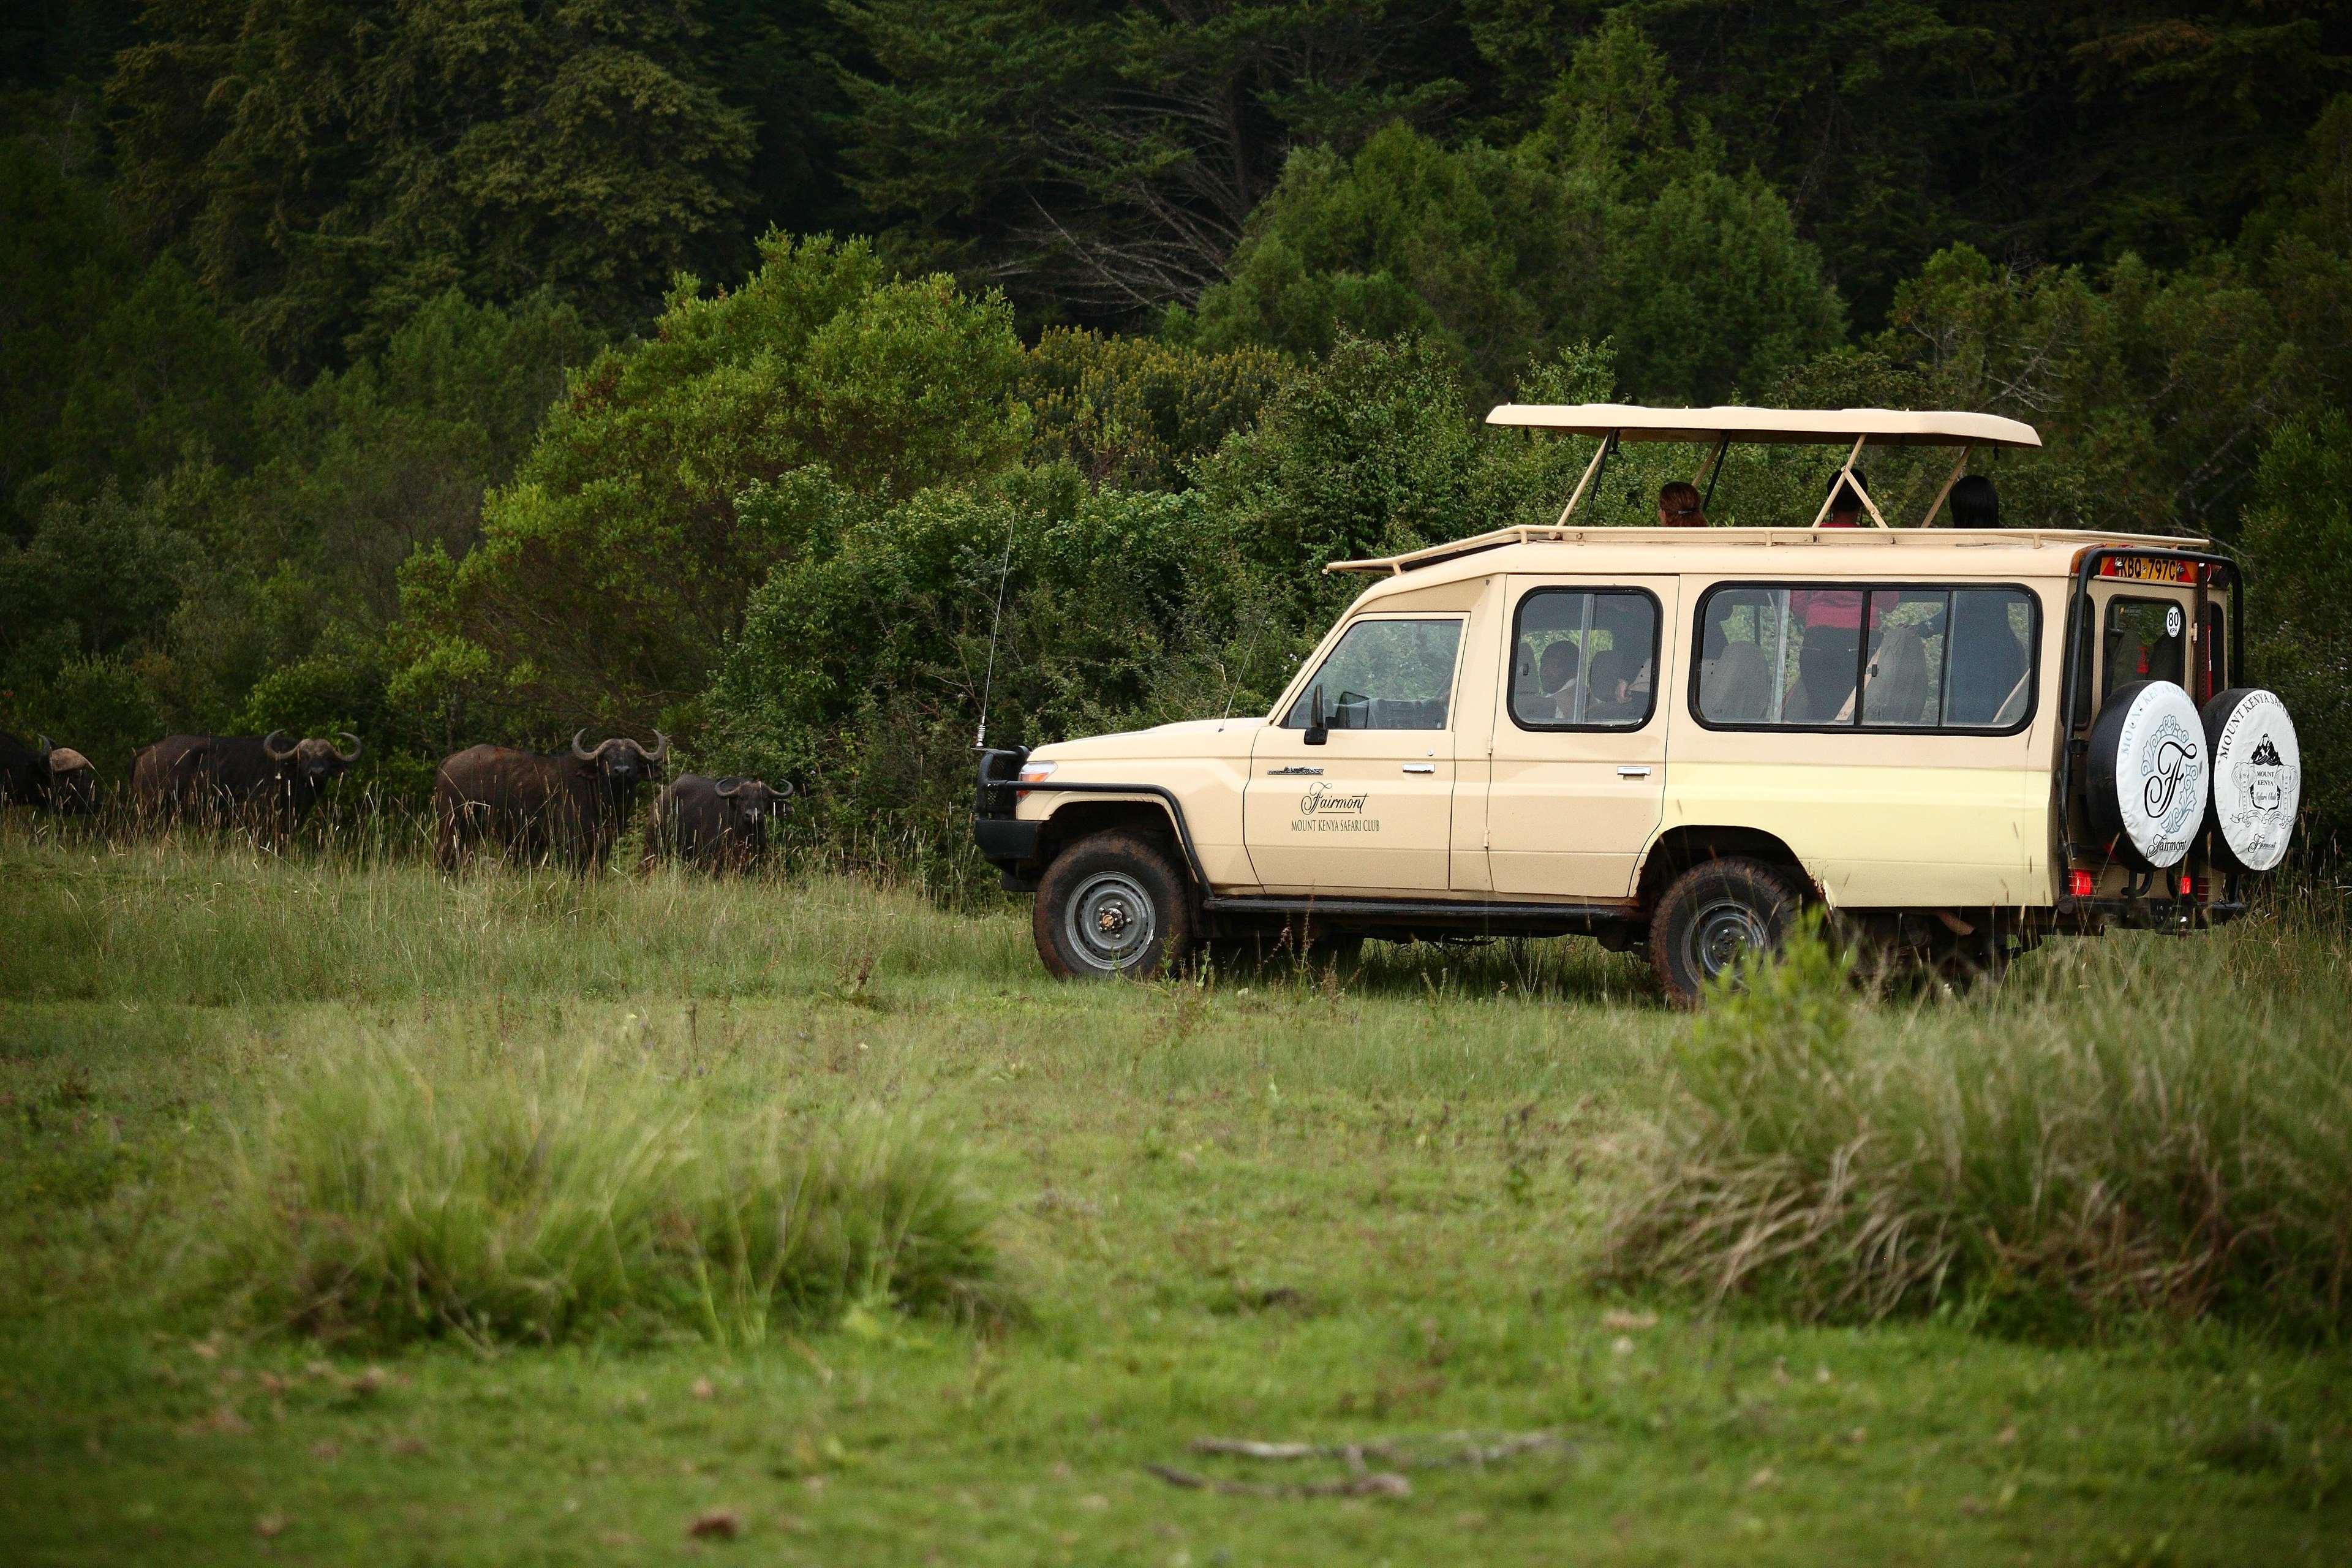 Fairmont Mount Kenya Safari Club Hotel Nanyuki Esterno foto